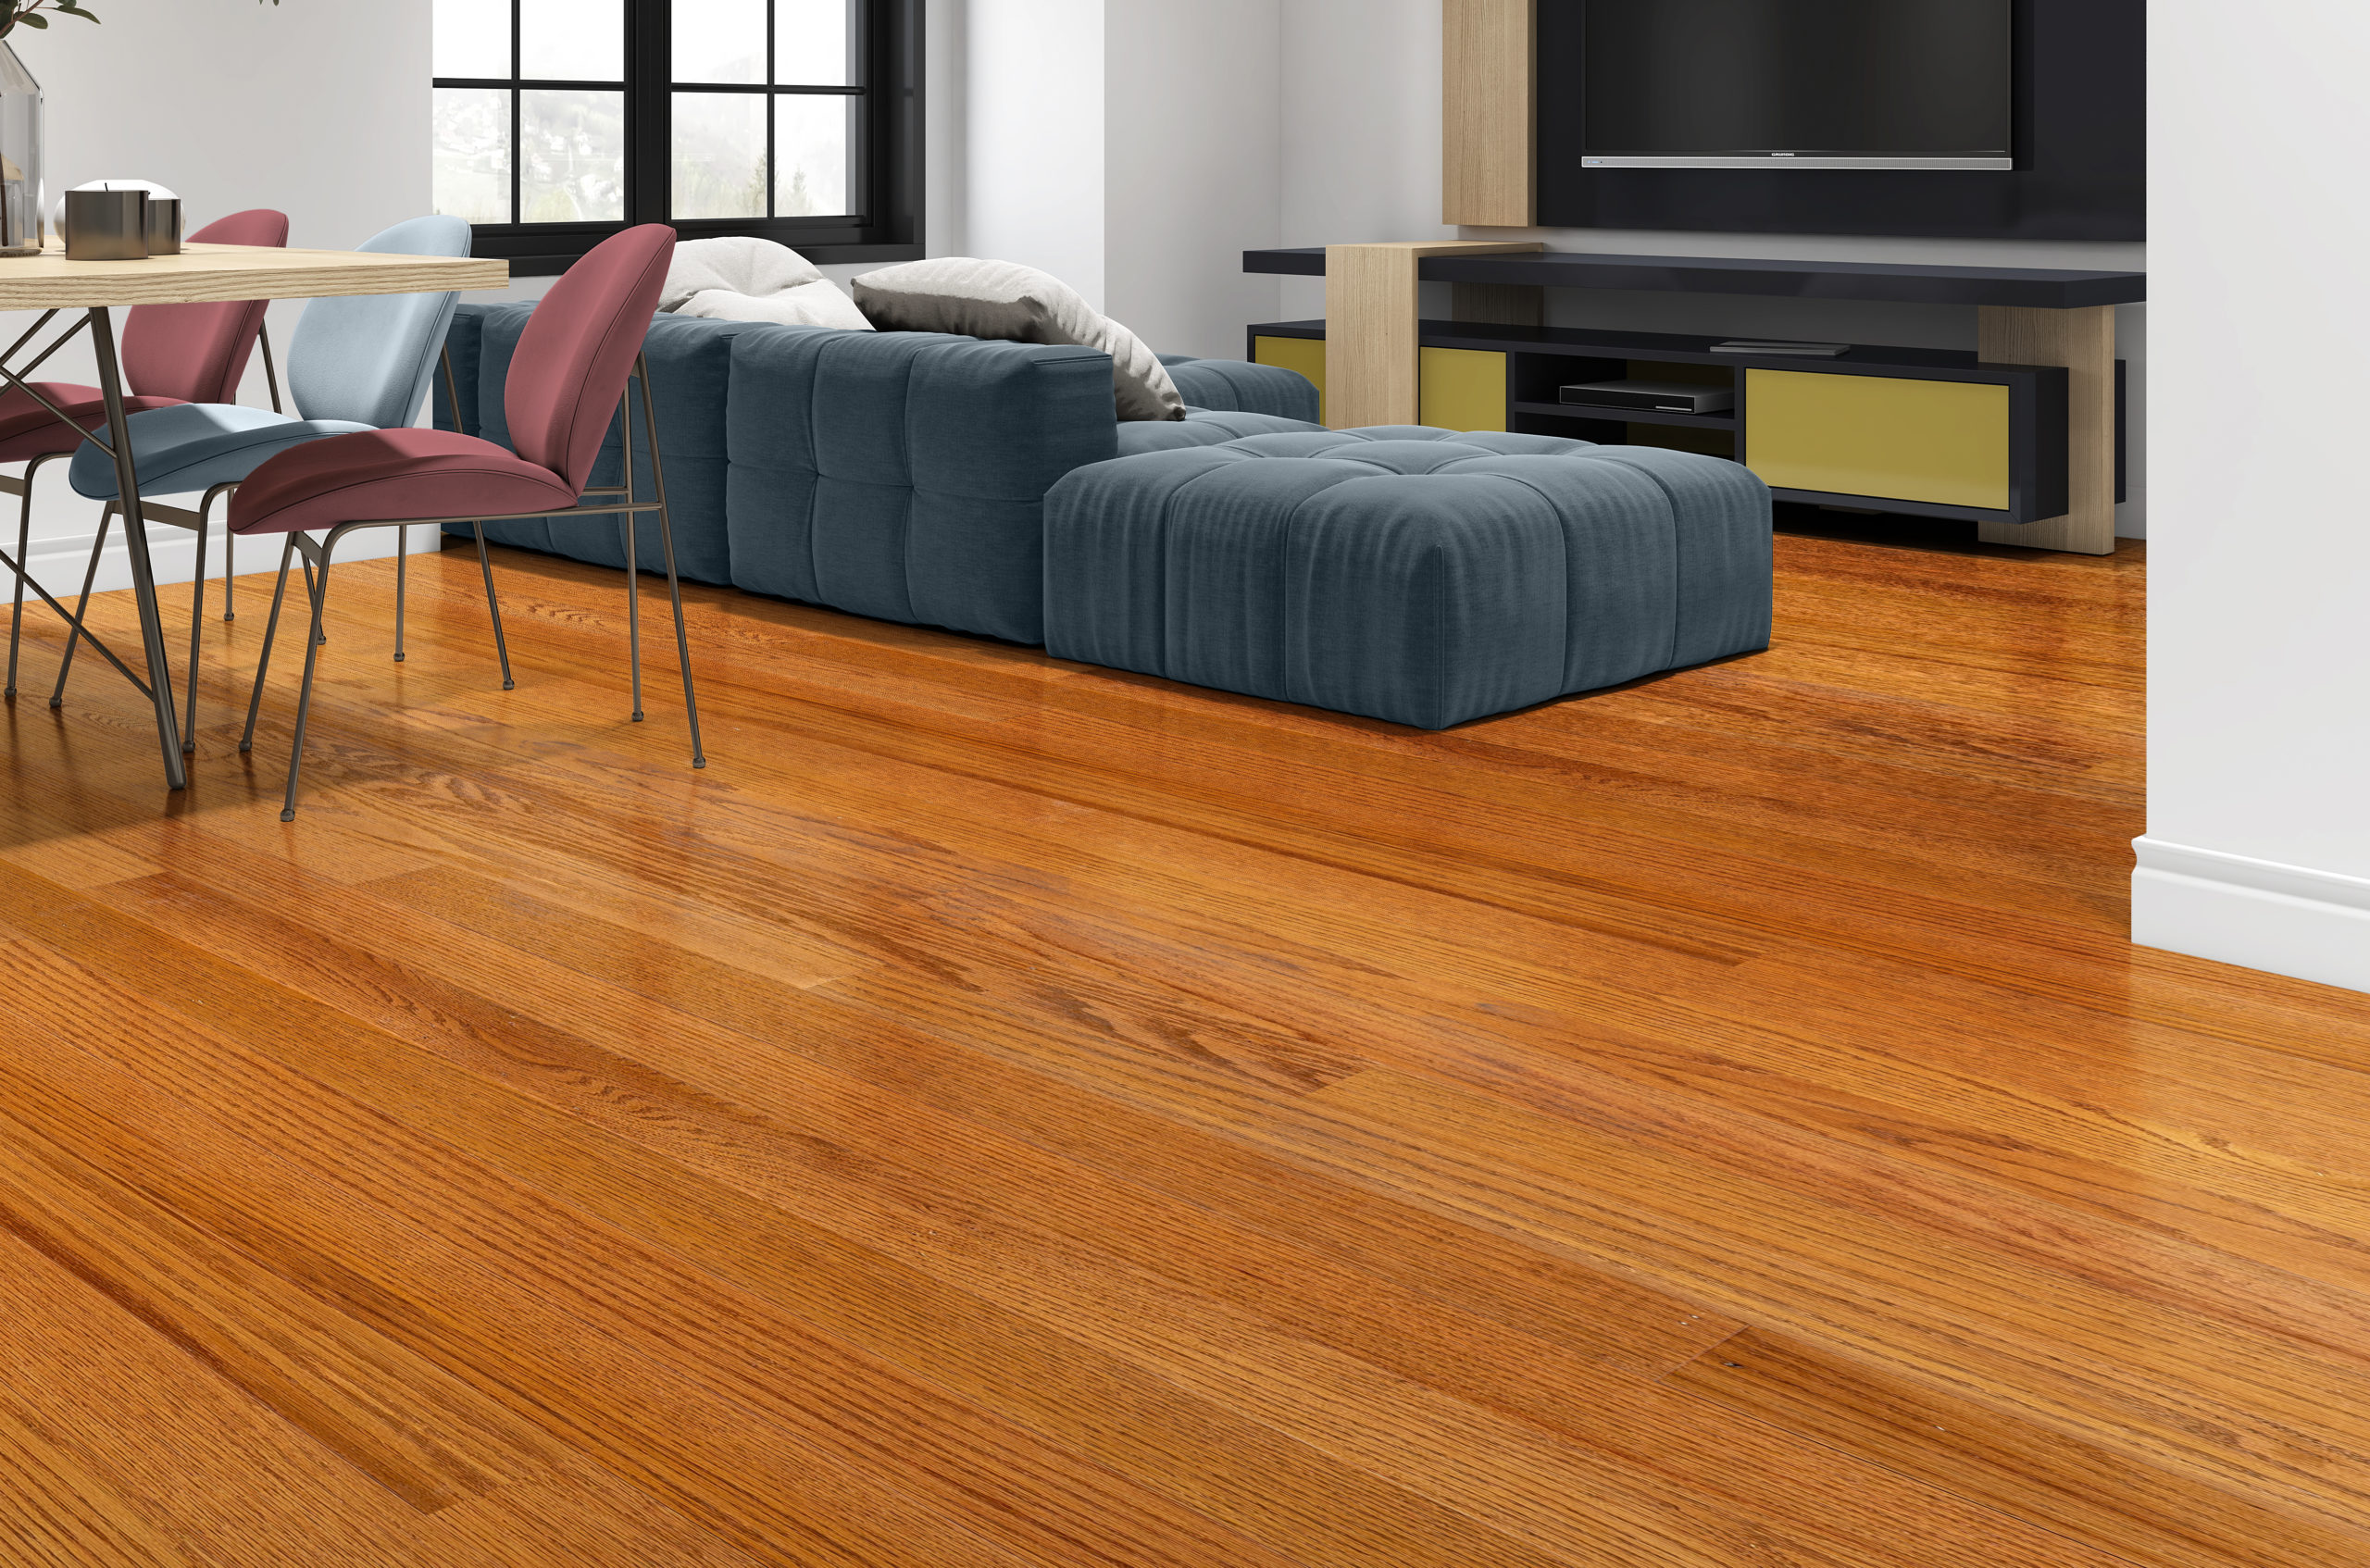 Prefinished Chestnut Oak Hardwood Flooring, 1 3 4 Hardwood Flooring